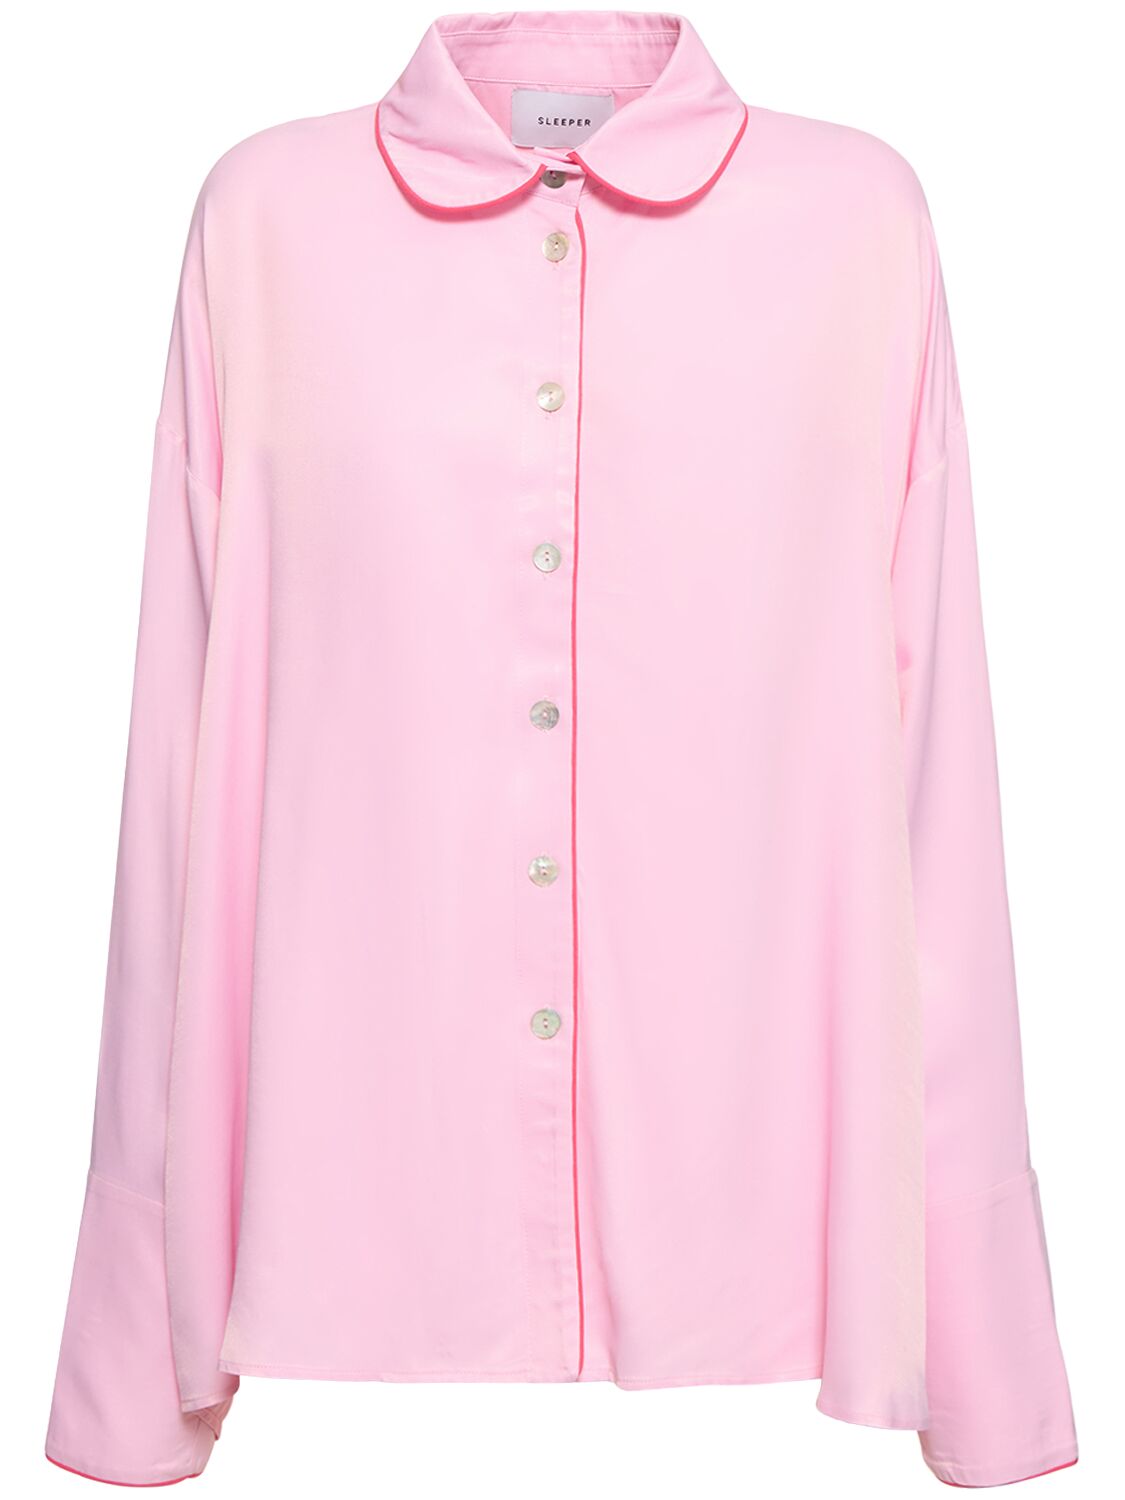 Sleeper Pastelle Oversize Shirt In Pink